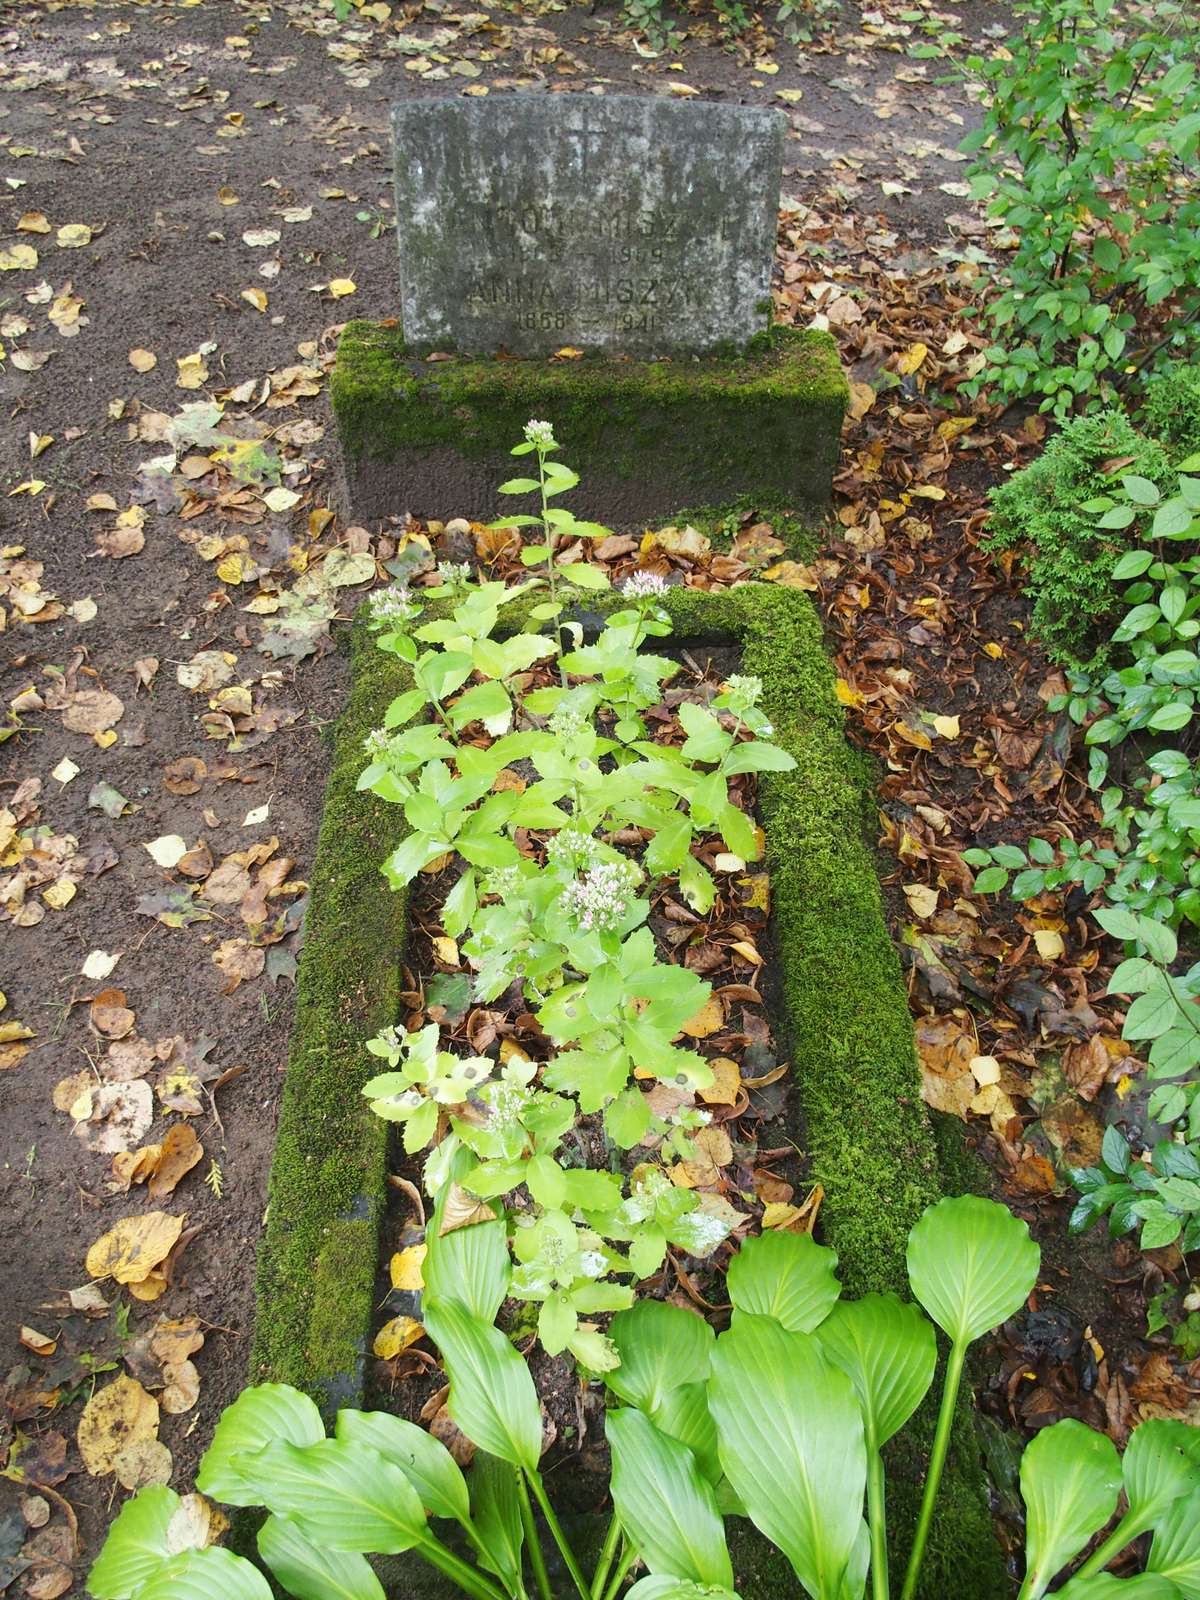 Tombstone of Anna Miszyn and Antoni Miszyn